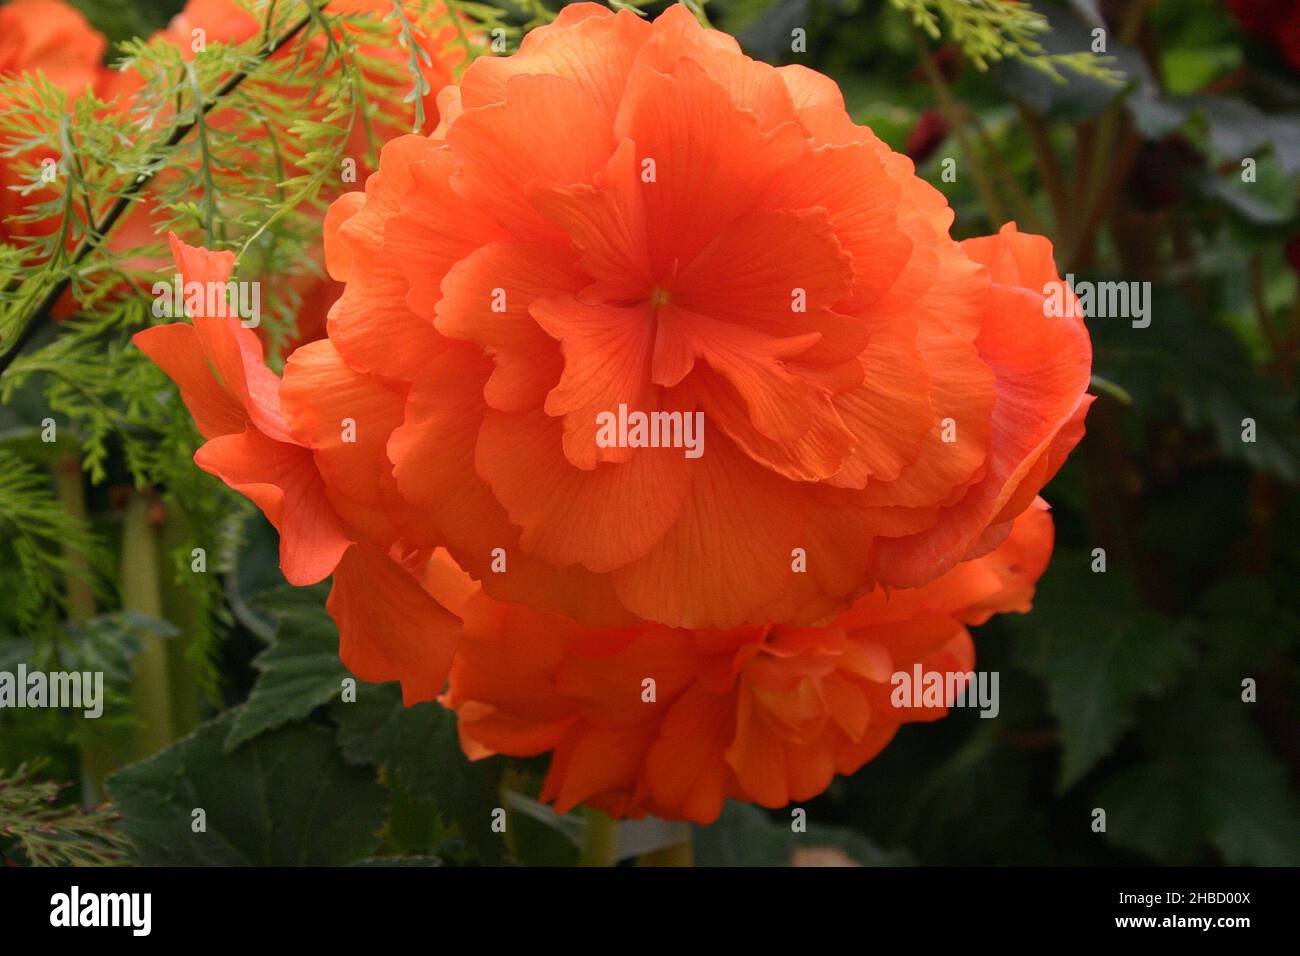 CLOSE-UP OF A BEAUTIFUL ORANGE BEGONIA FLOWER. Stock Photo